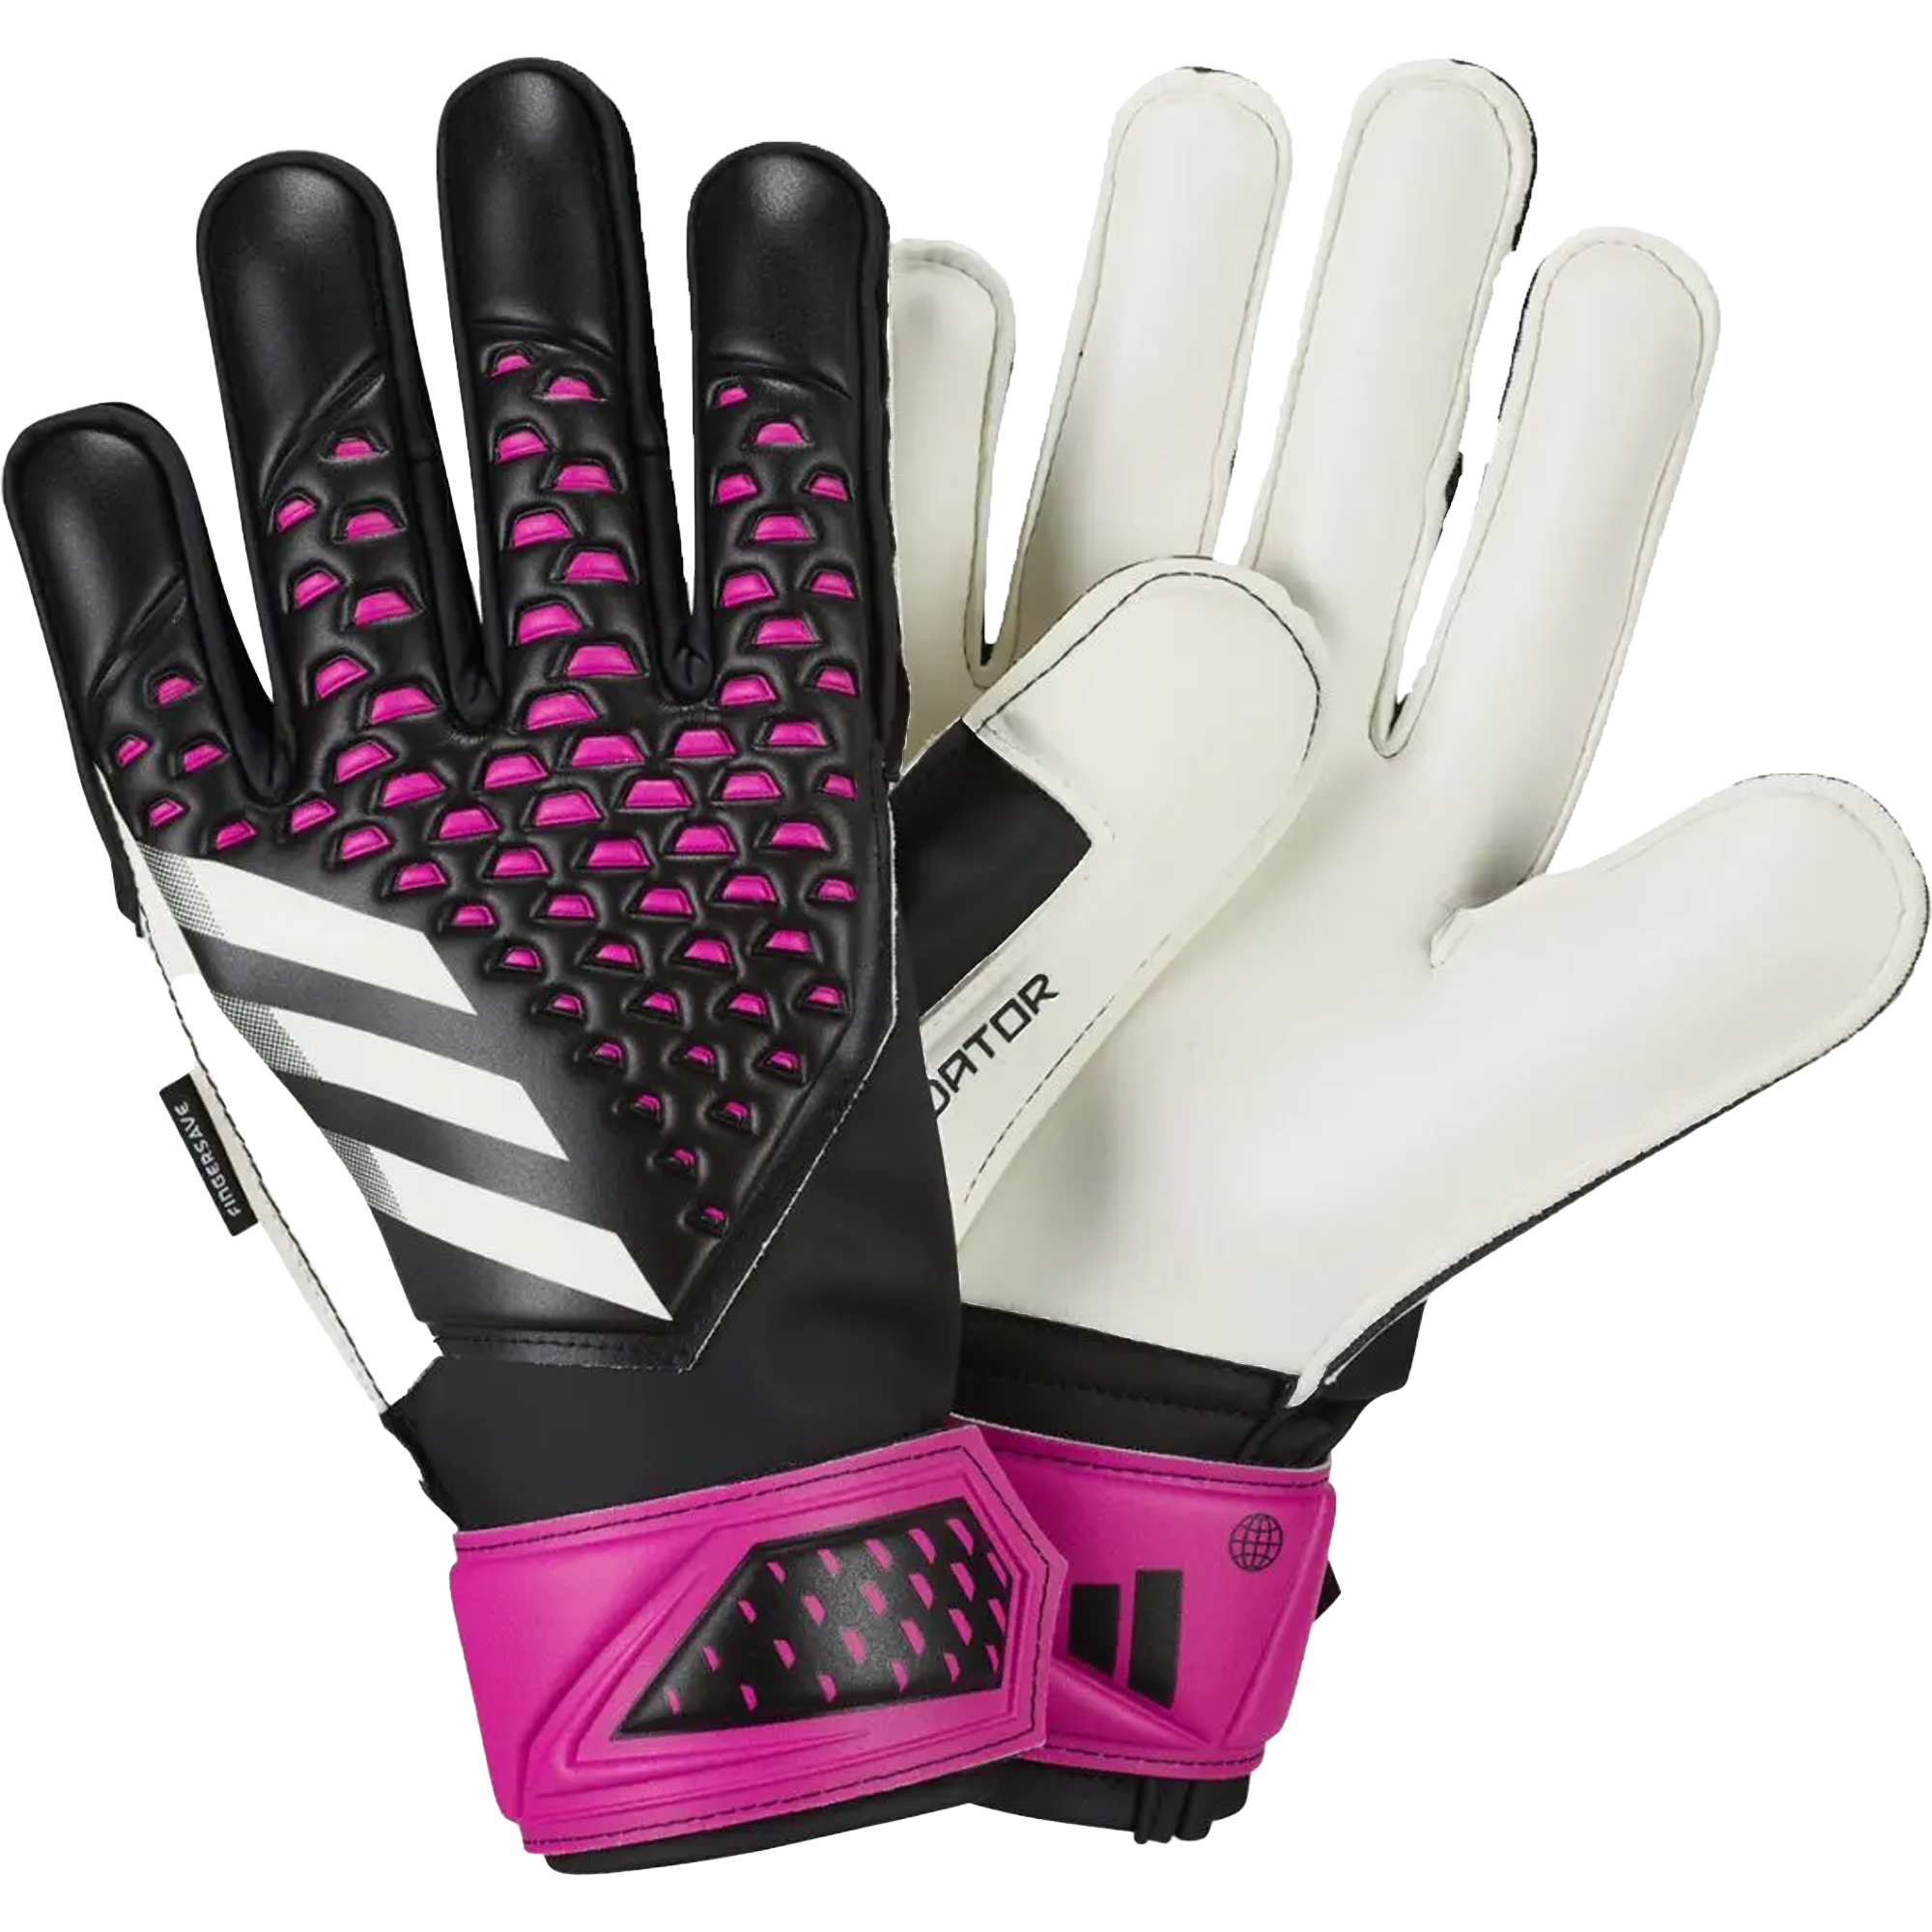 Soccer Wisconsin - adidas Predator Youth GL Match Finger Save GK Gloves - Black / Pink